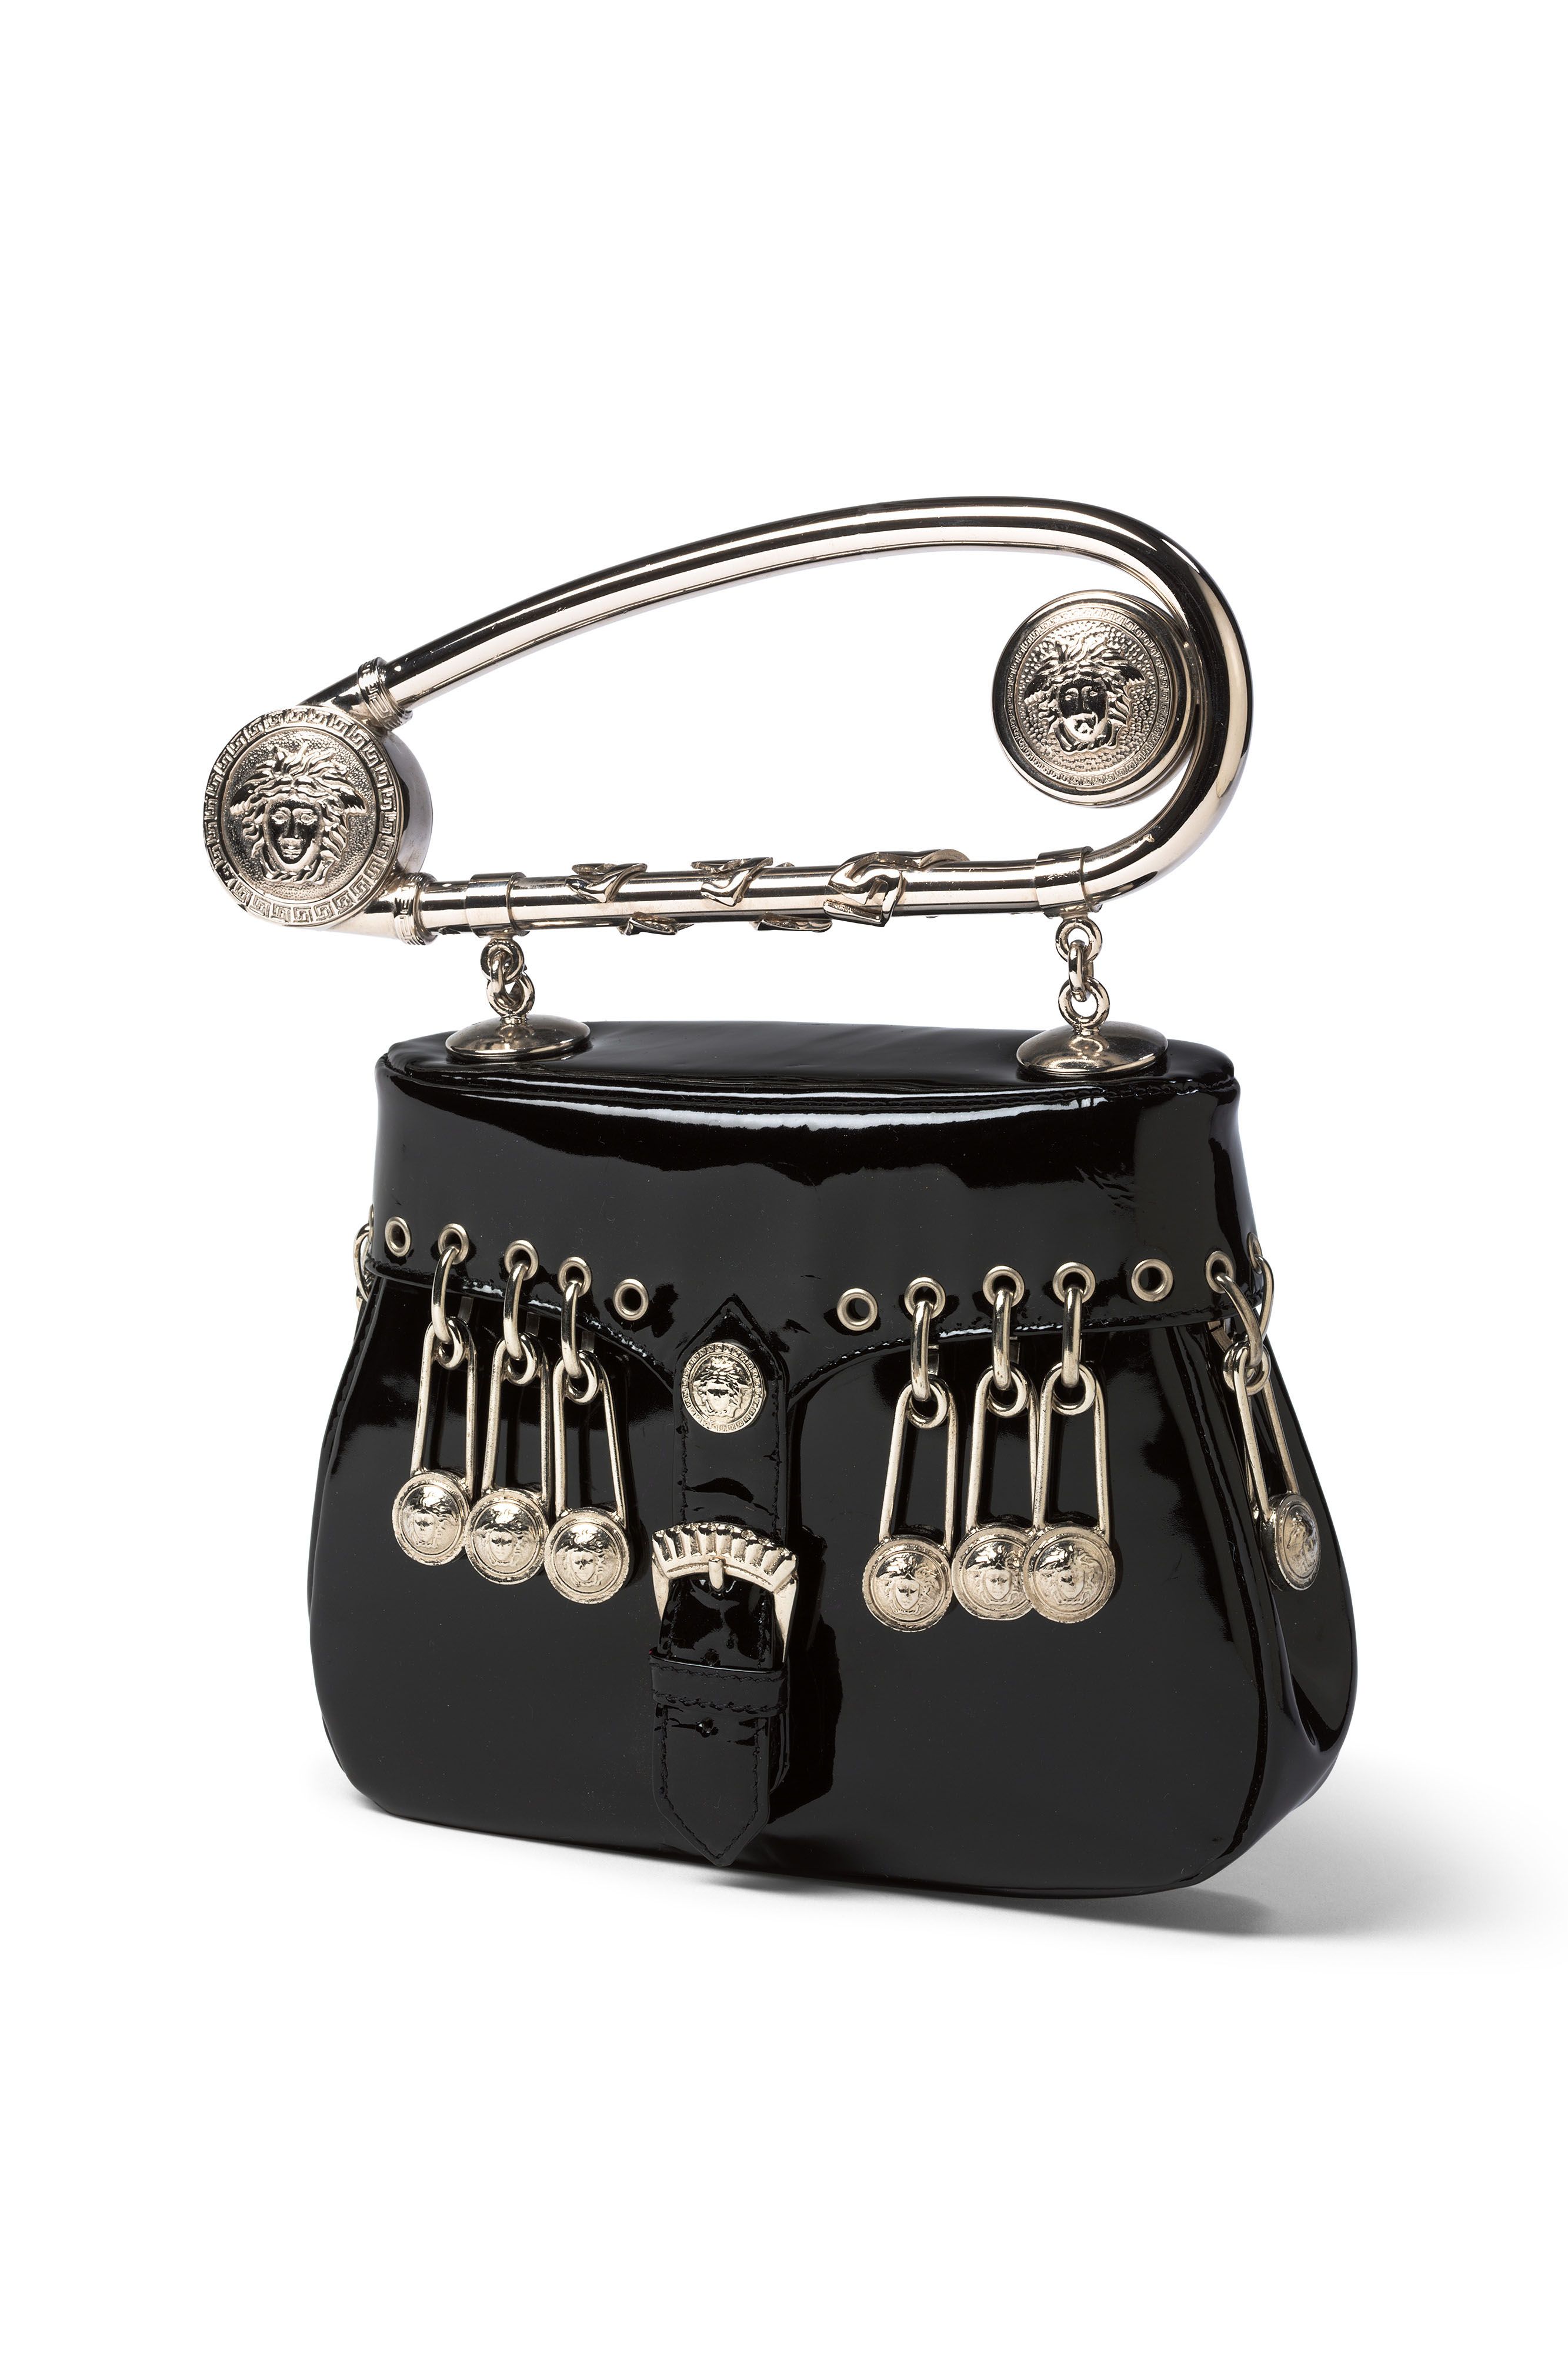 Pin on Celebrity Handbags